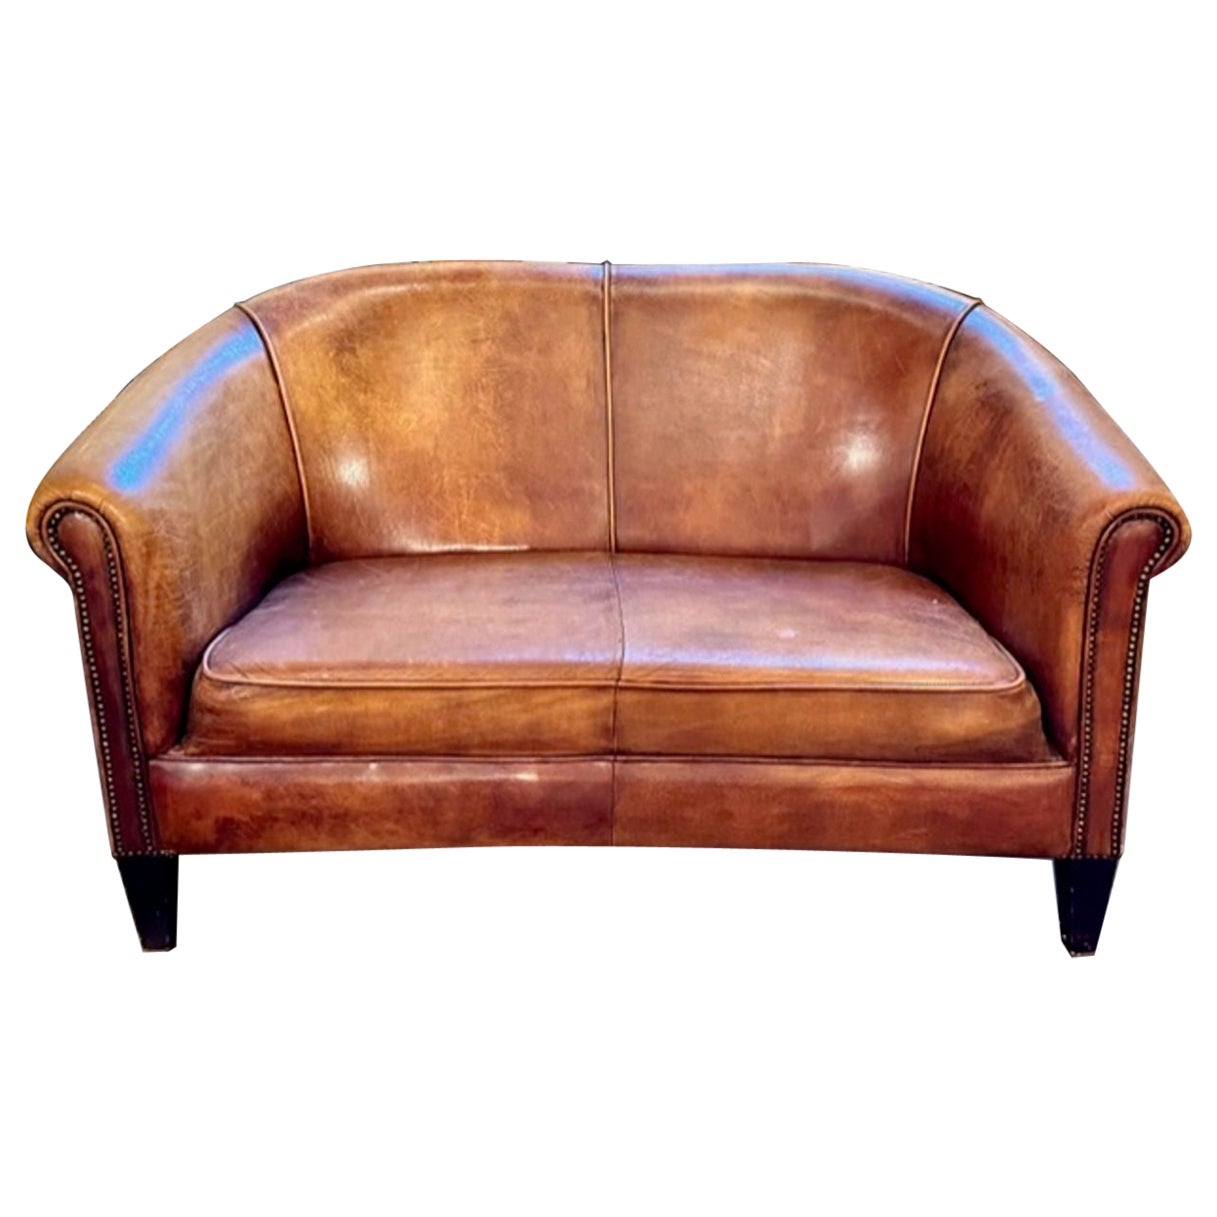 Vintage Französisch Leder-Club-Sofa